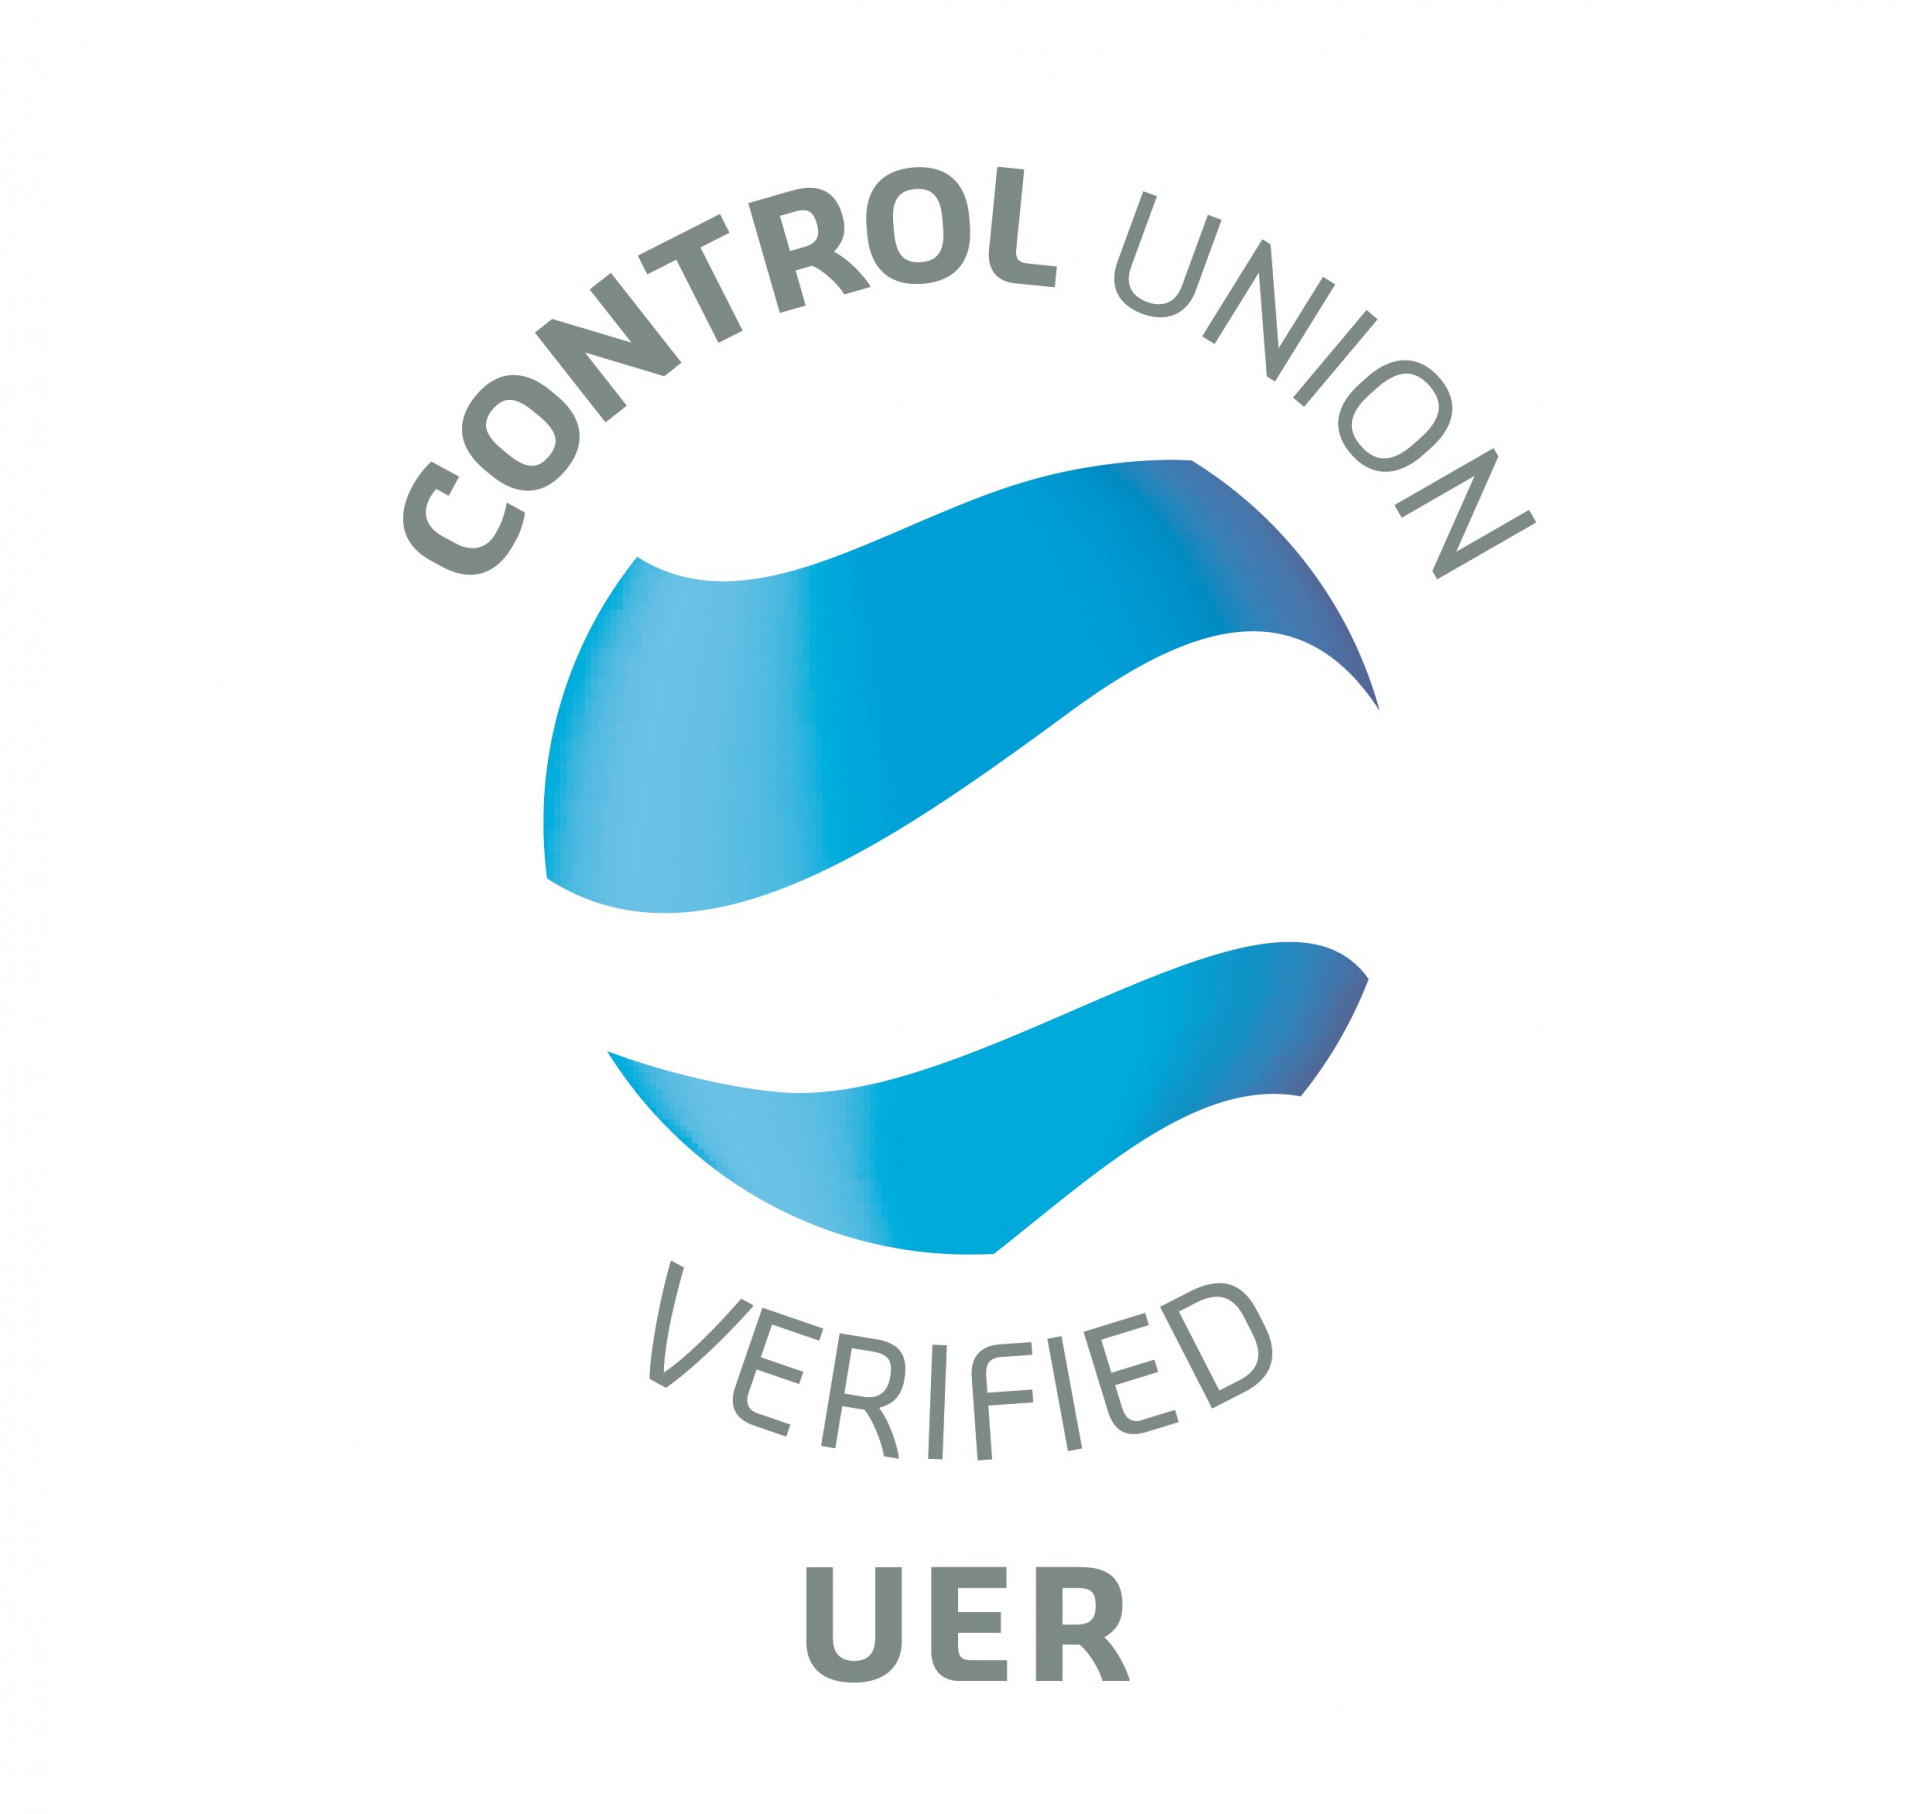 UER – Upstream Emission Reduction Verification